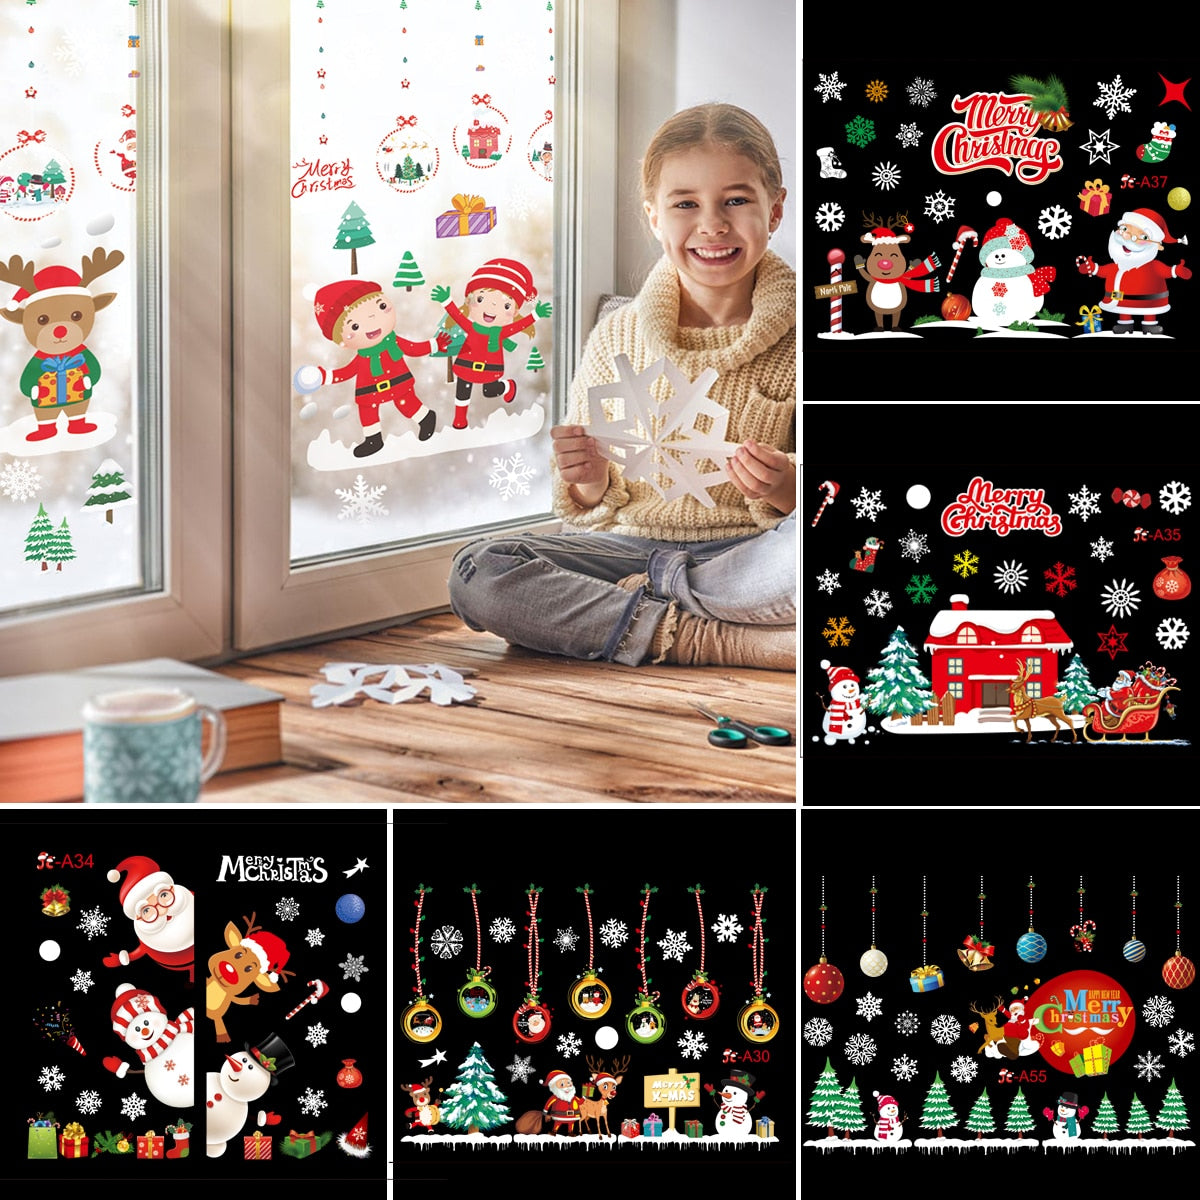 Wall Sticker Window Glass Christmas Decor